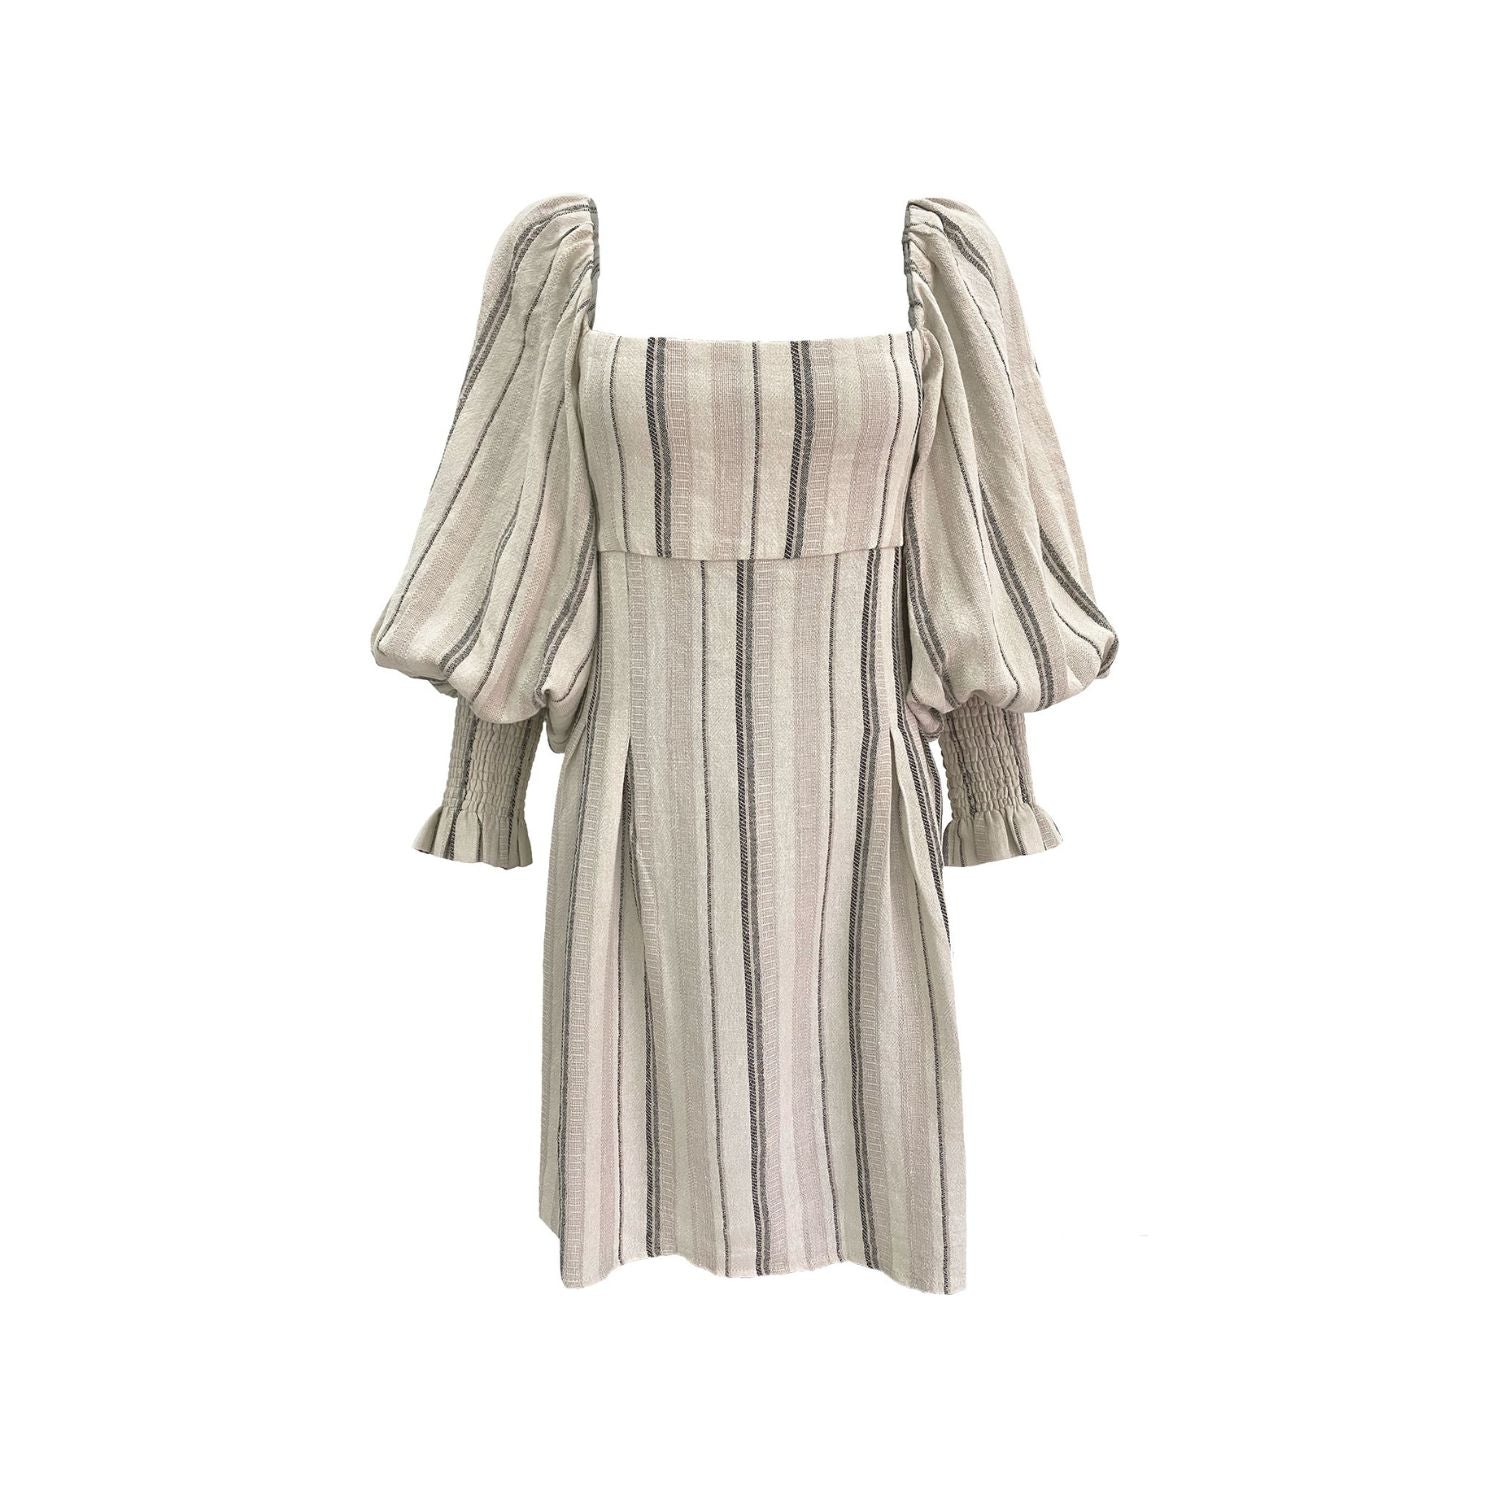 Rohnea Linen Shirring Mini Dress in Stripe